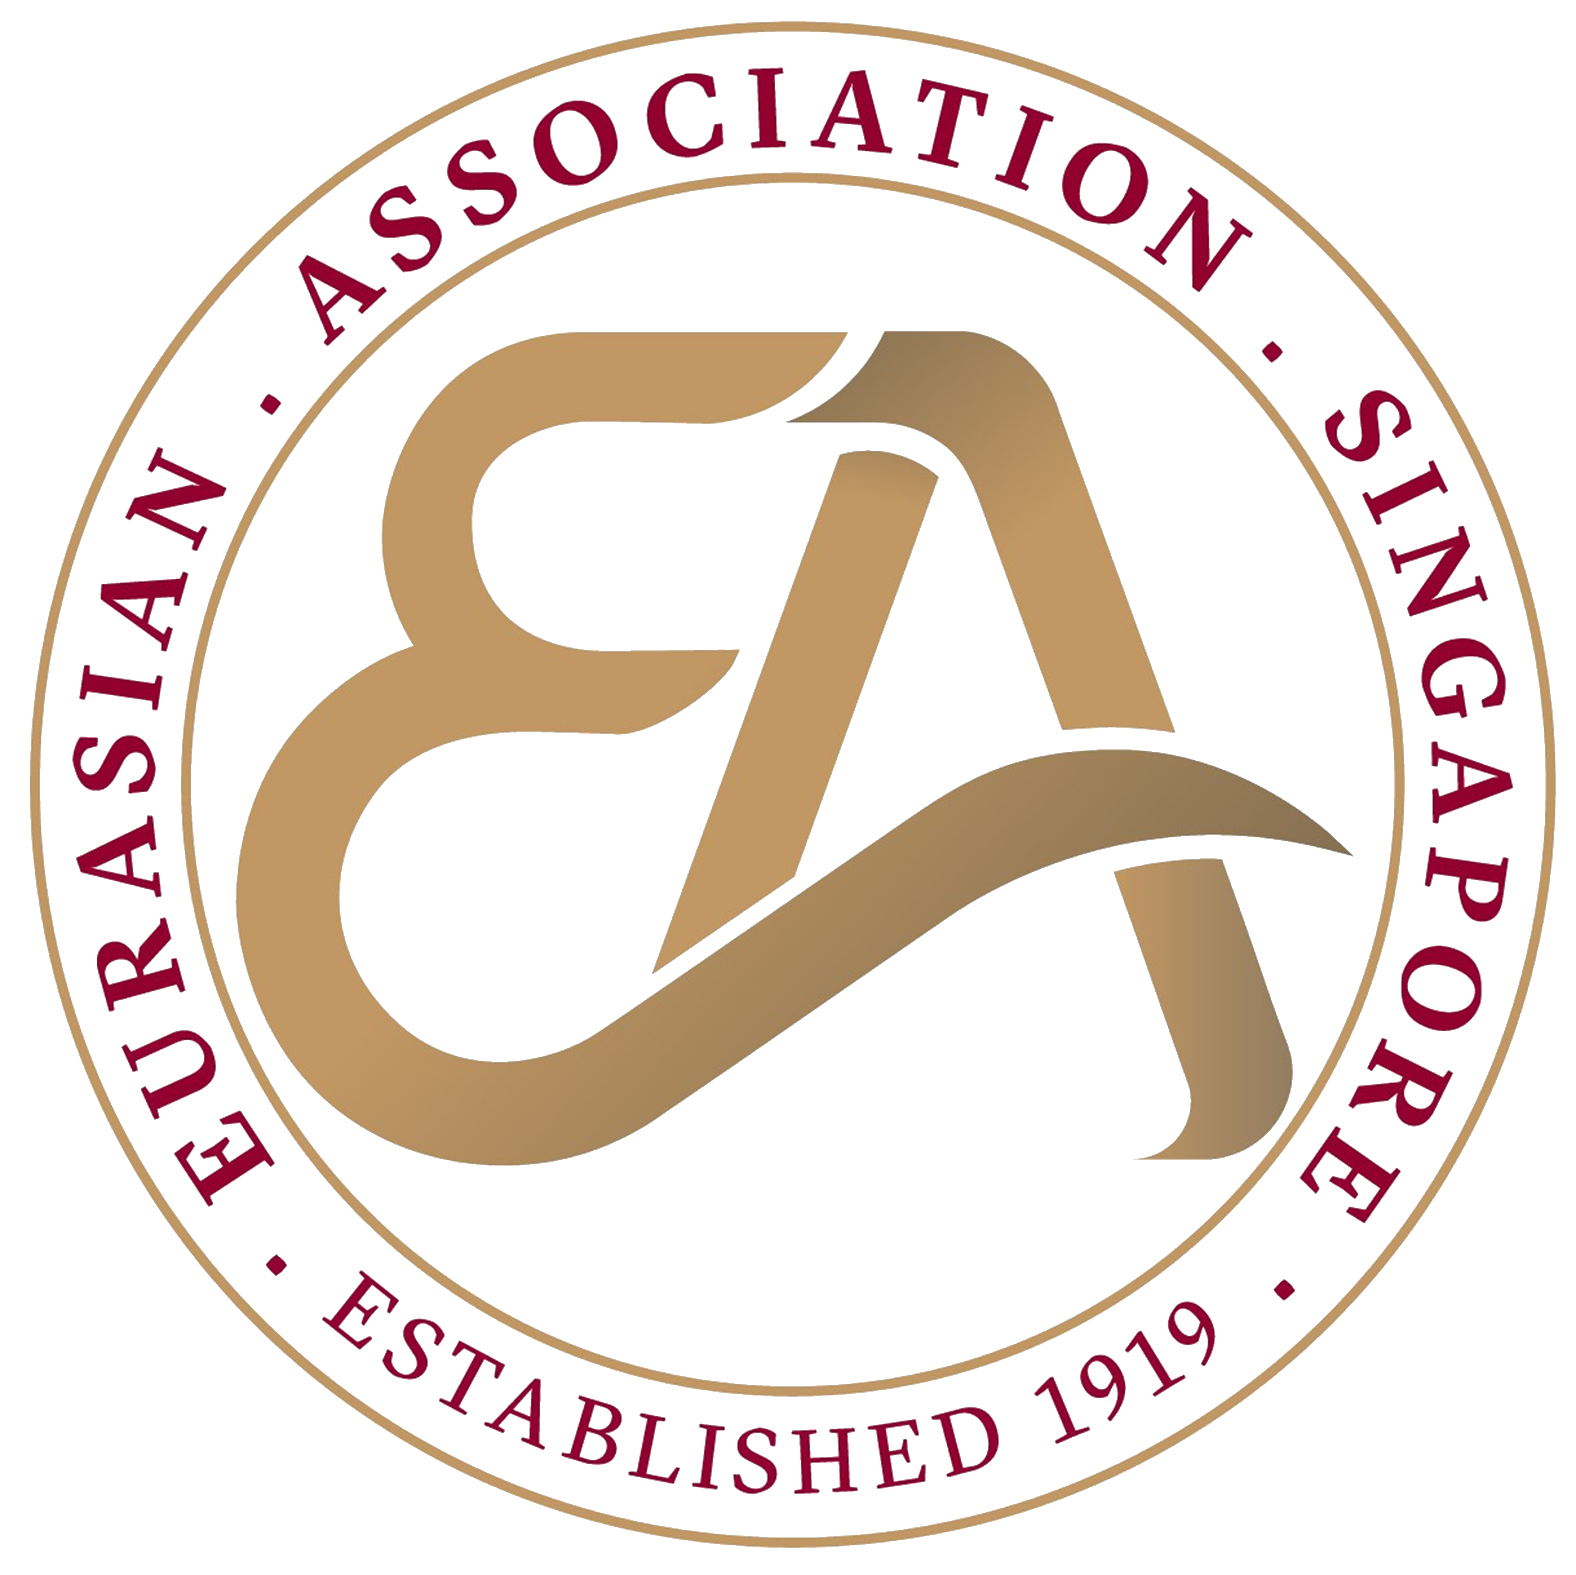 Eurasian association logo